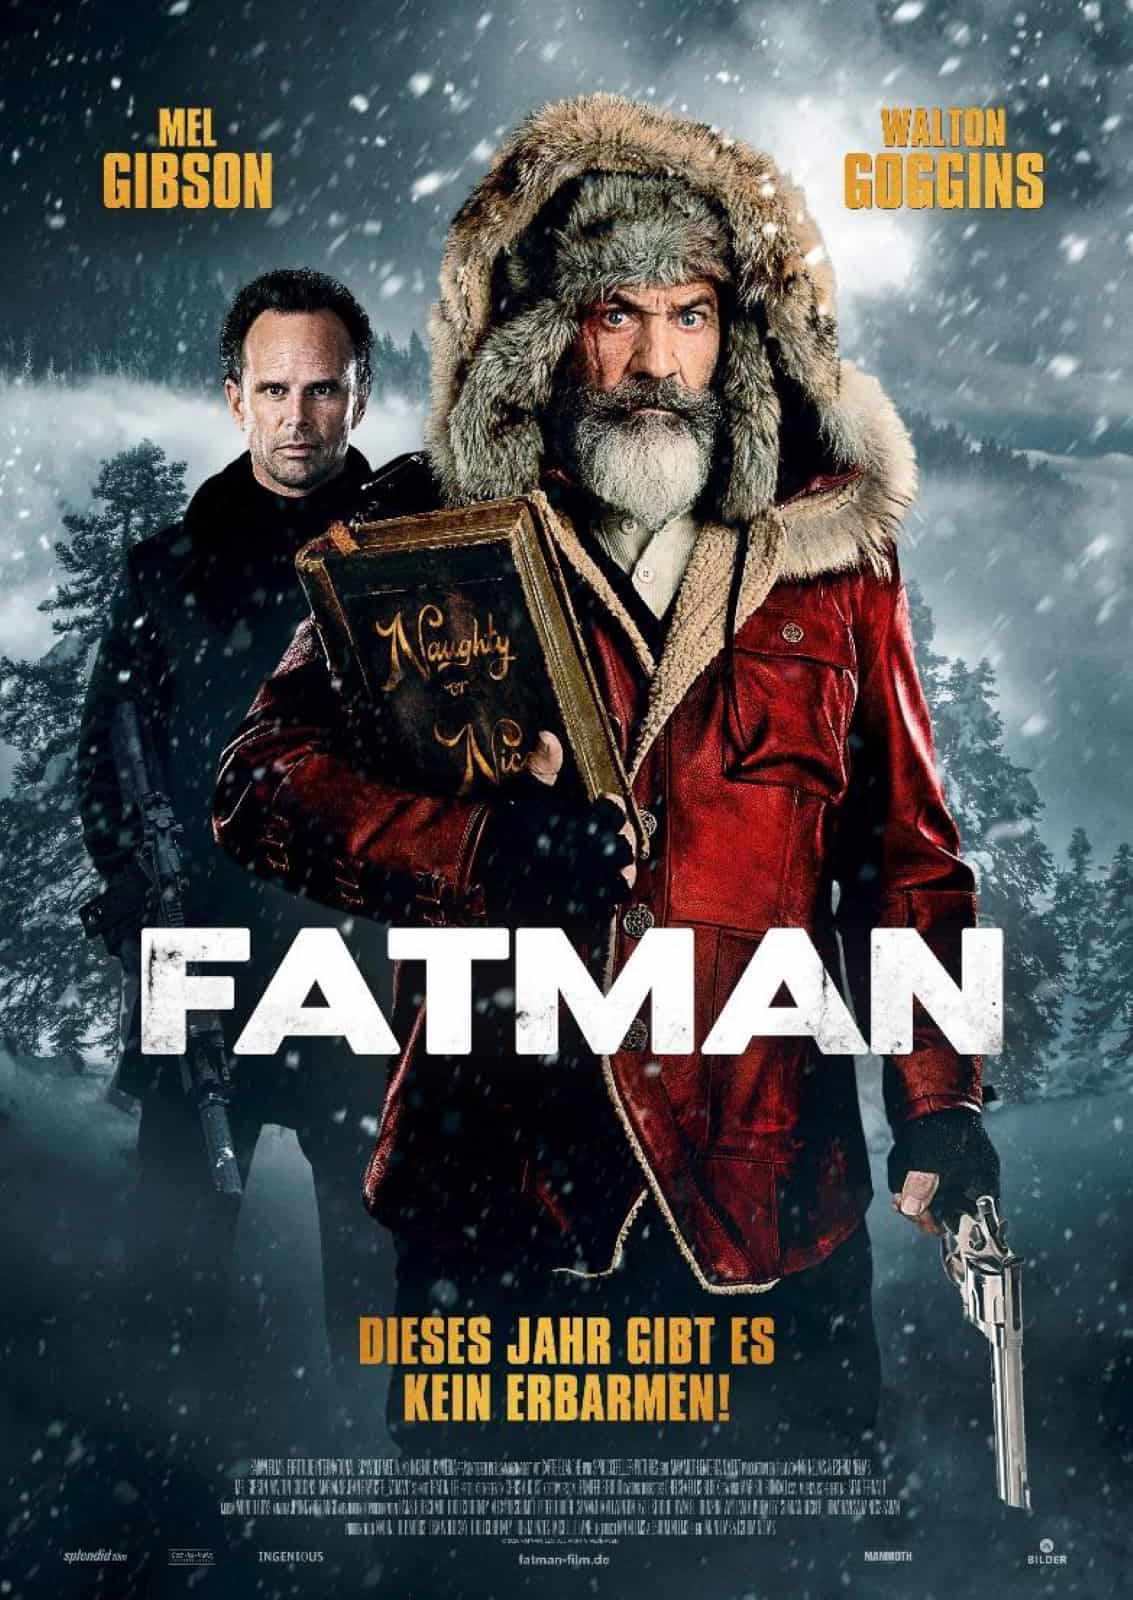 Fatman zeigt Mel Gibson als Rüpel Weihnachtsmann